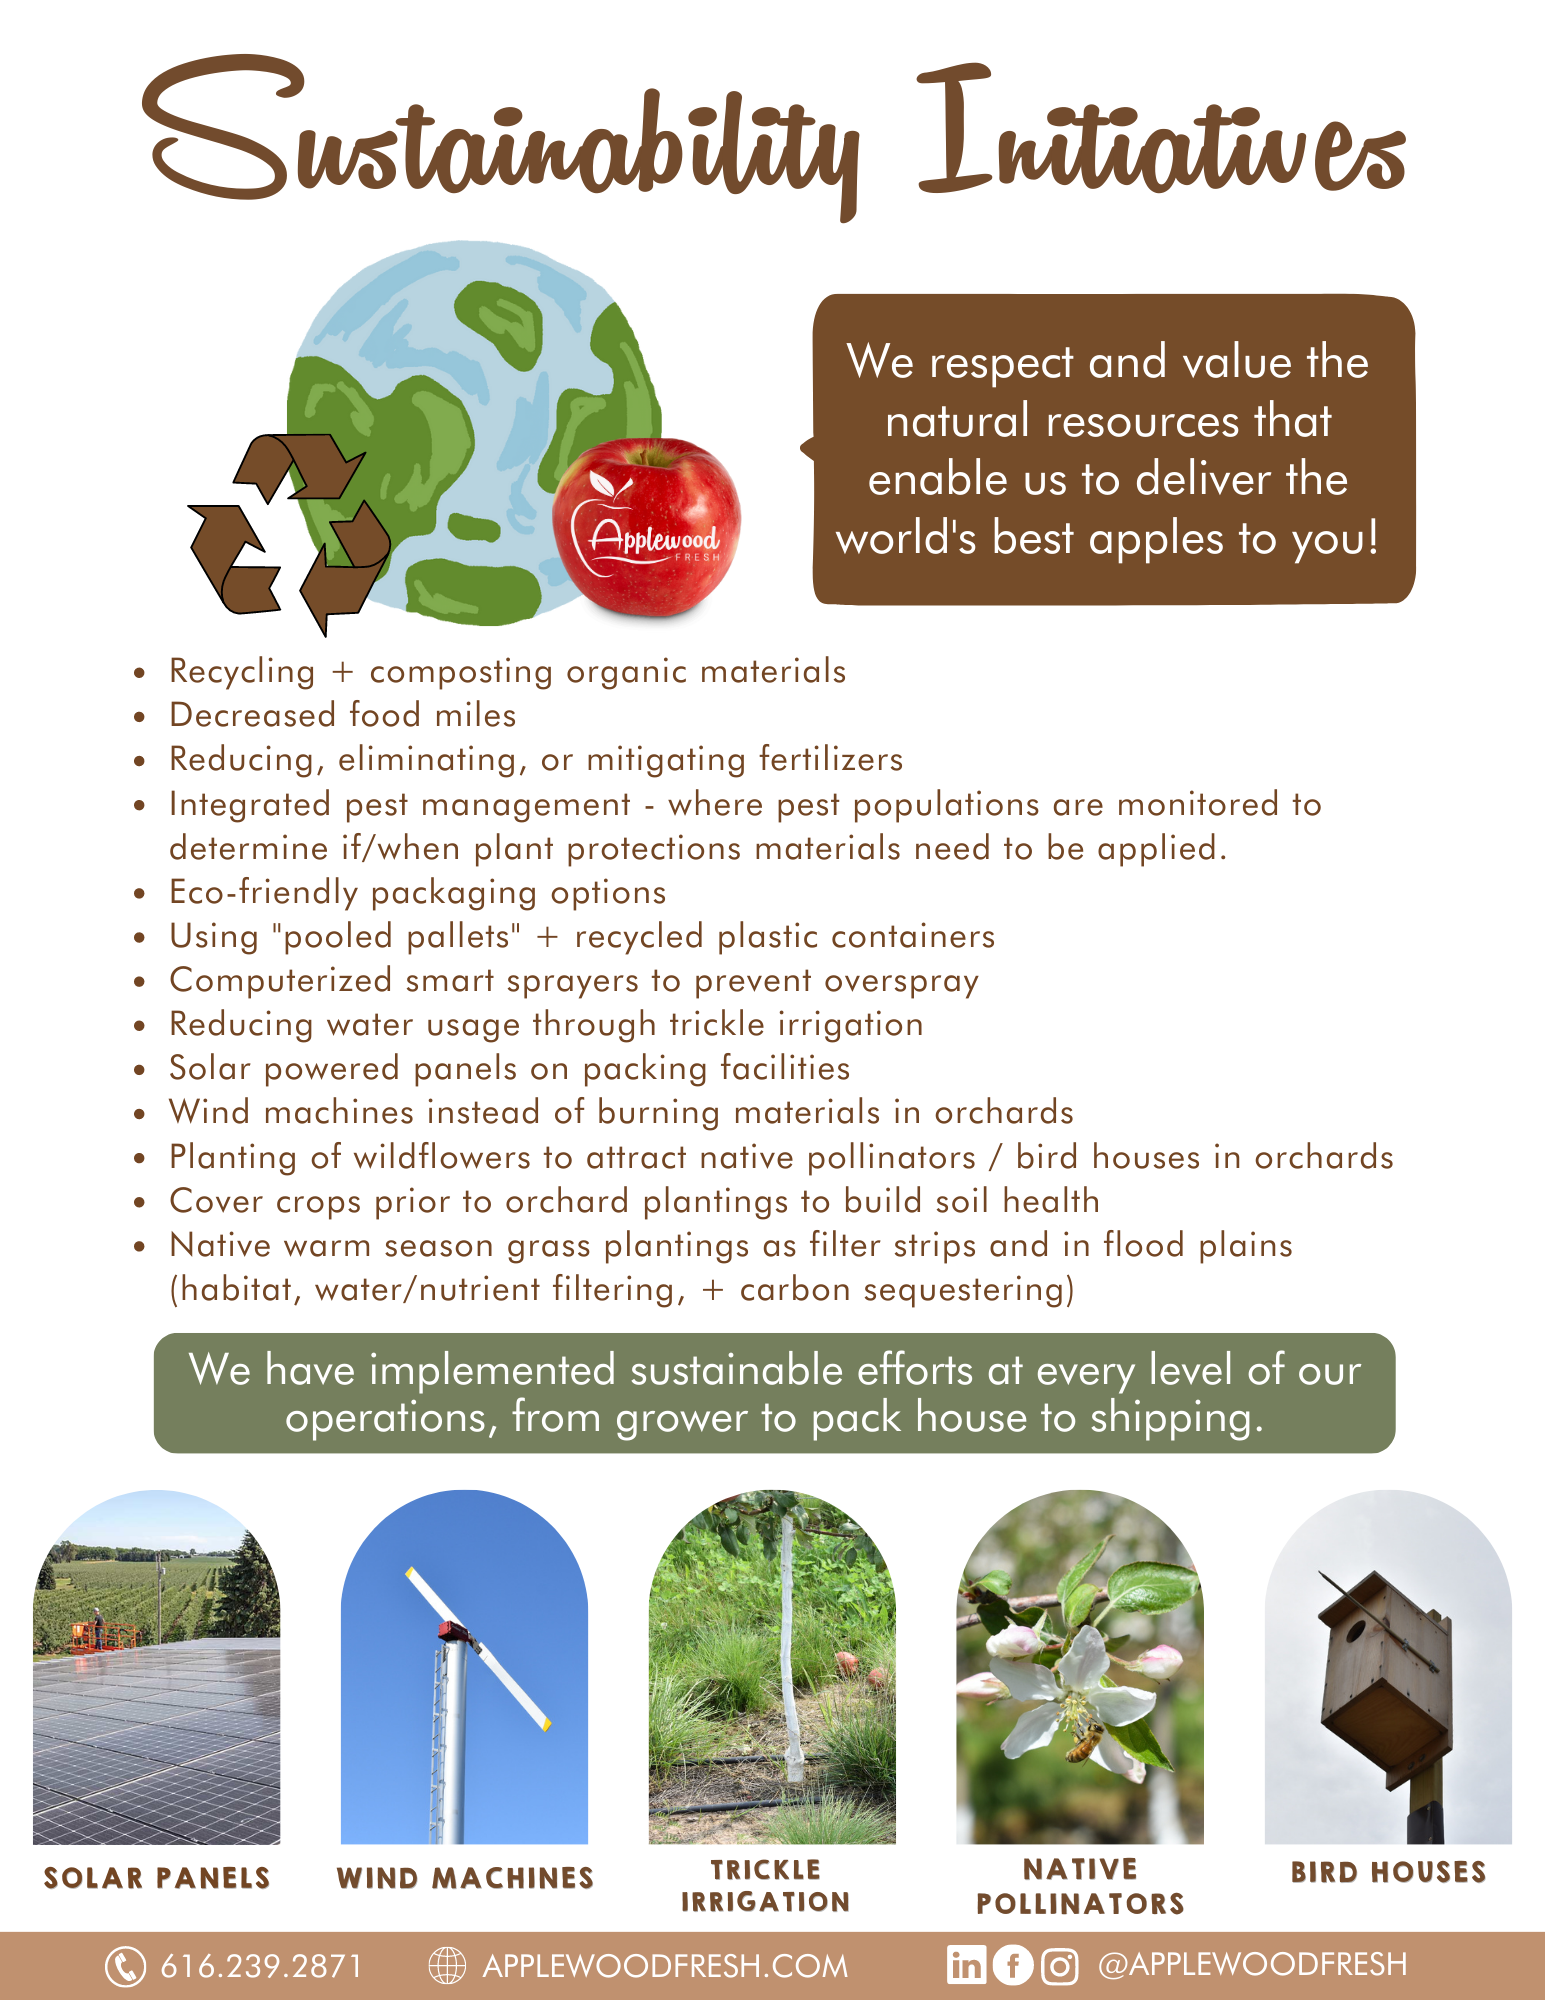 Applewood Fresh Growers Sustainability Initiatives